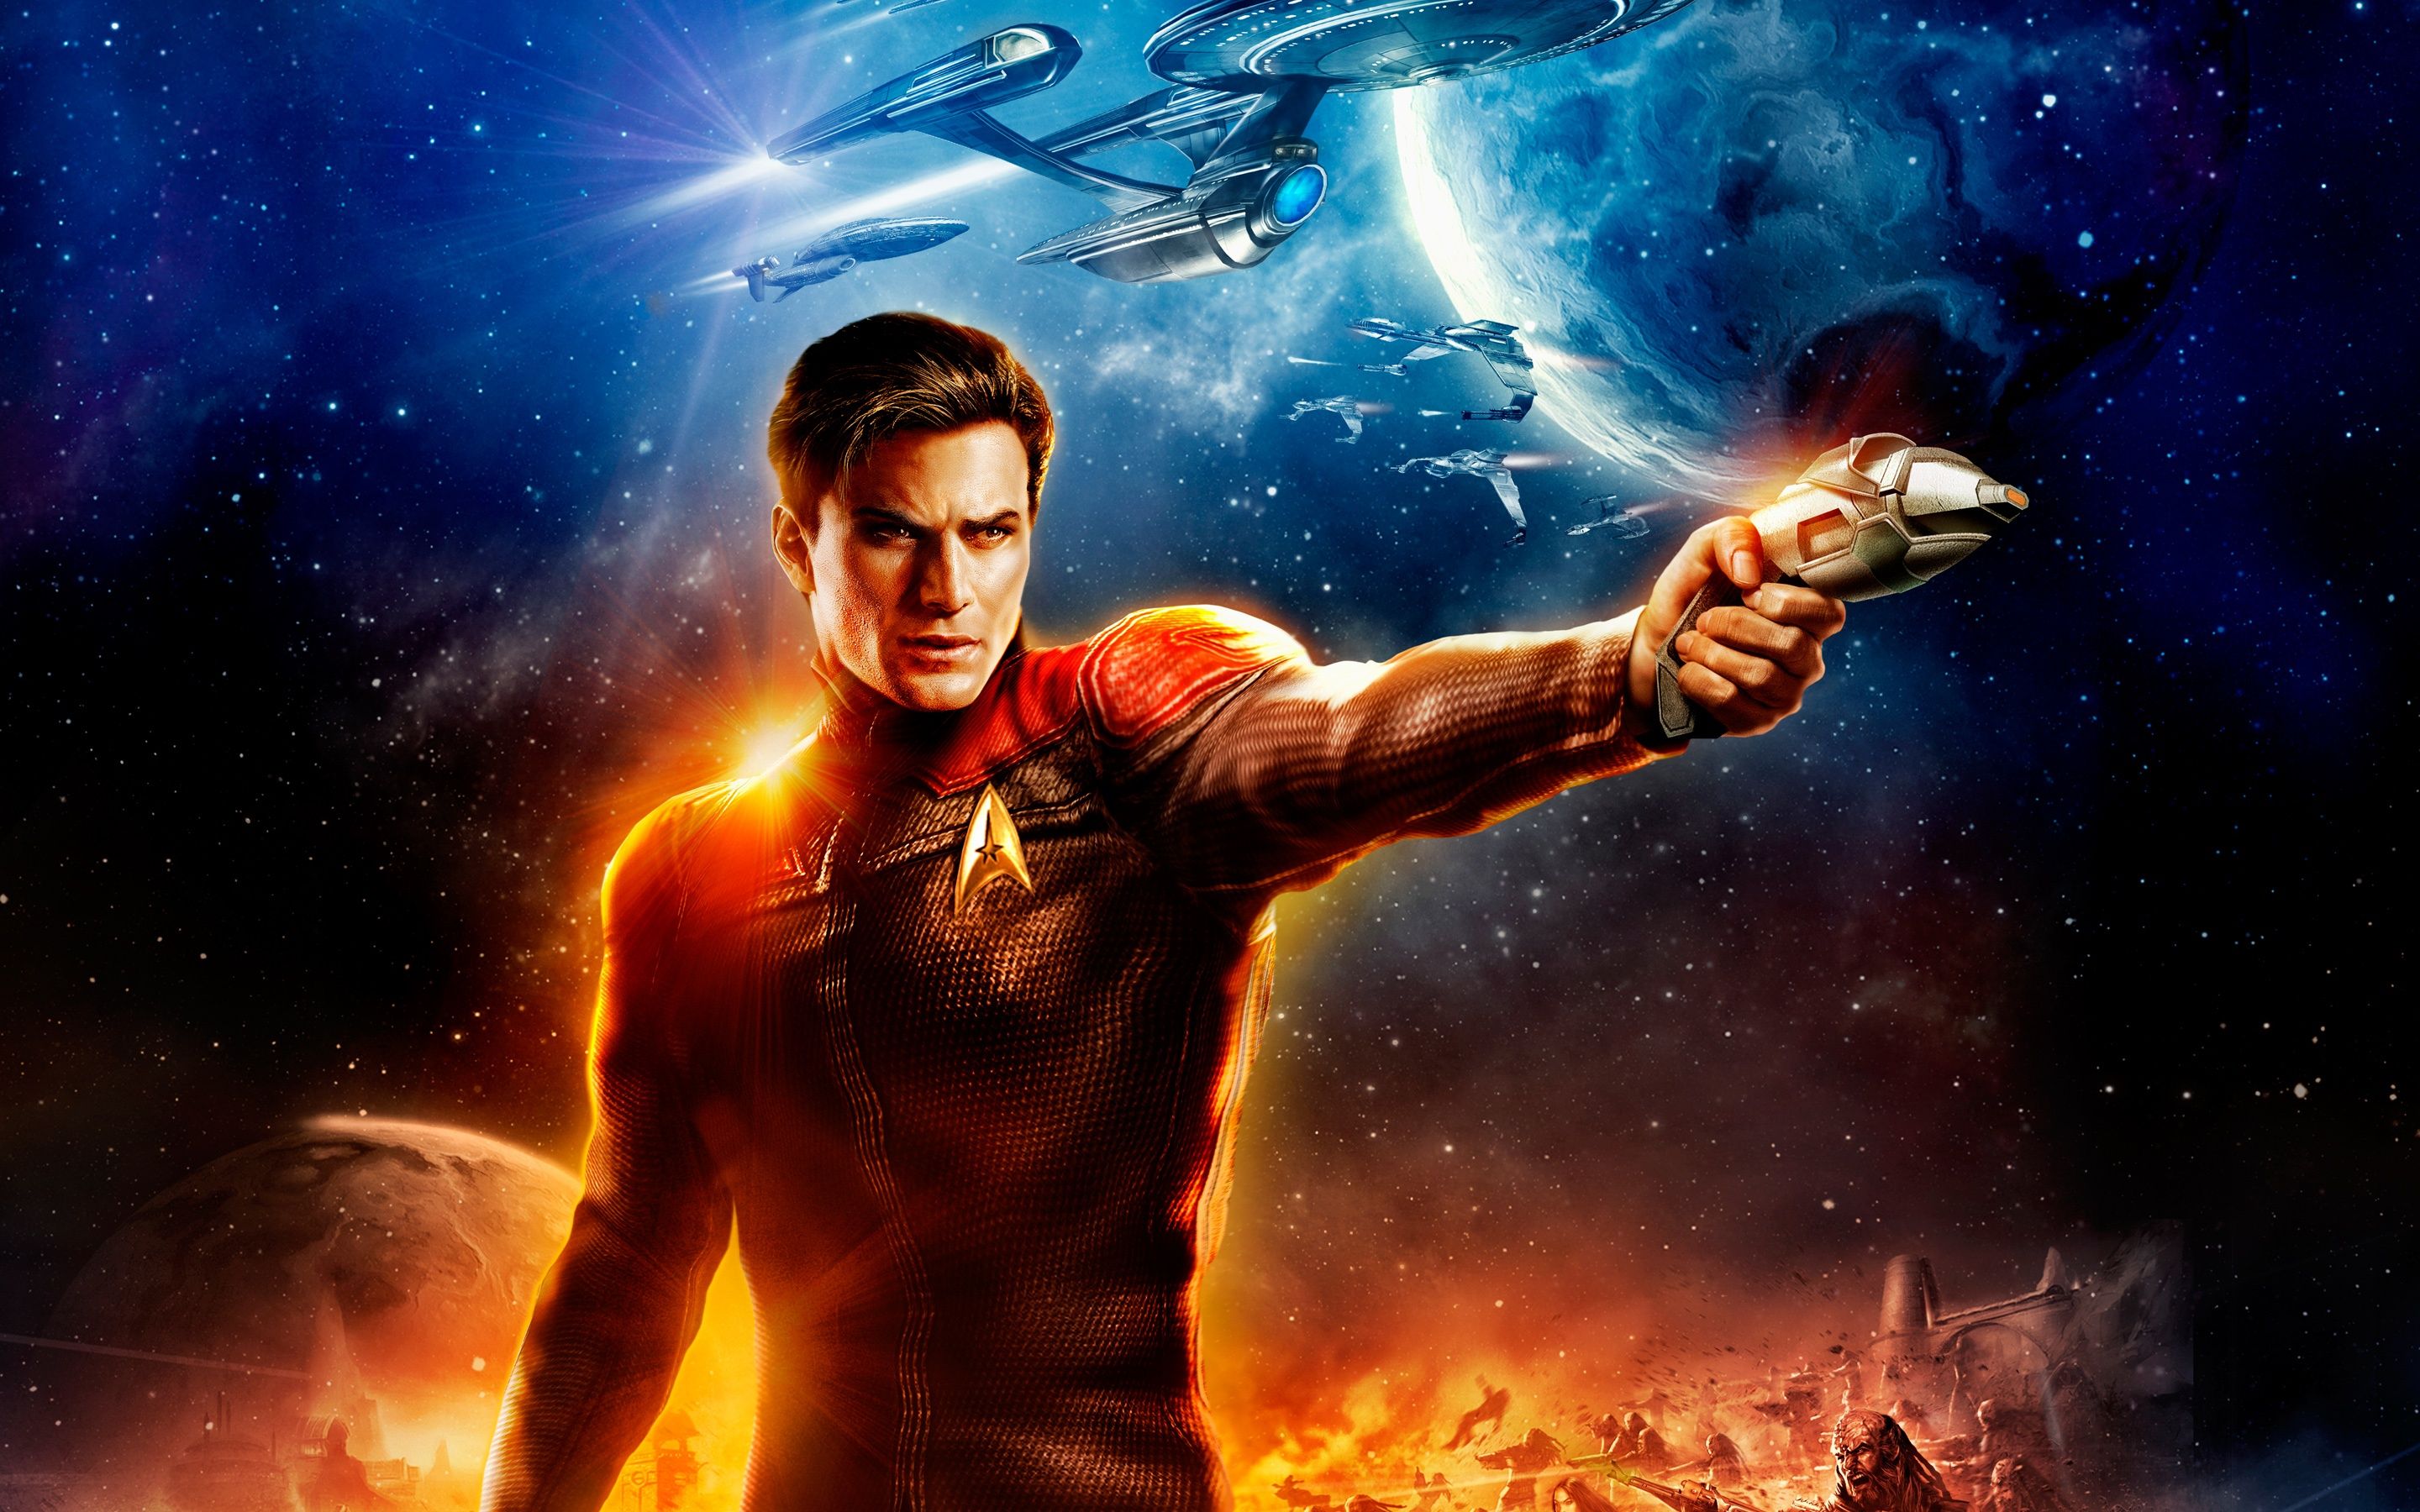 Star Trek Online Game HD Wallpaper in jpg format for free download